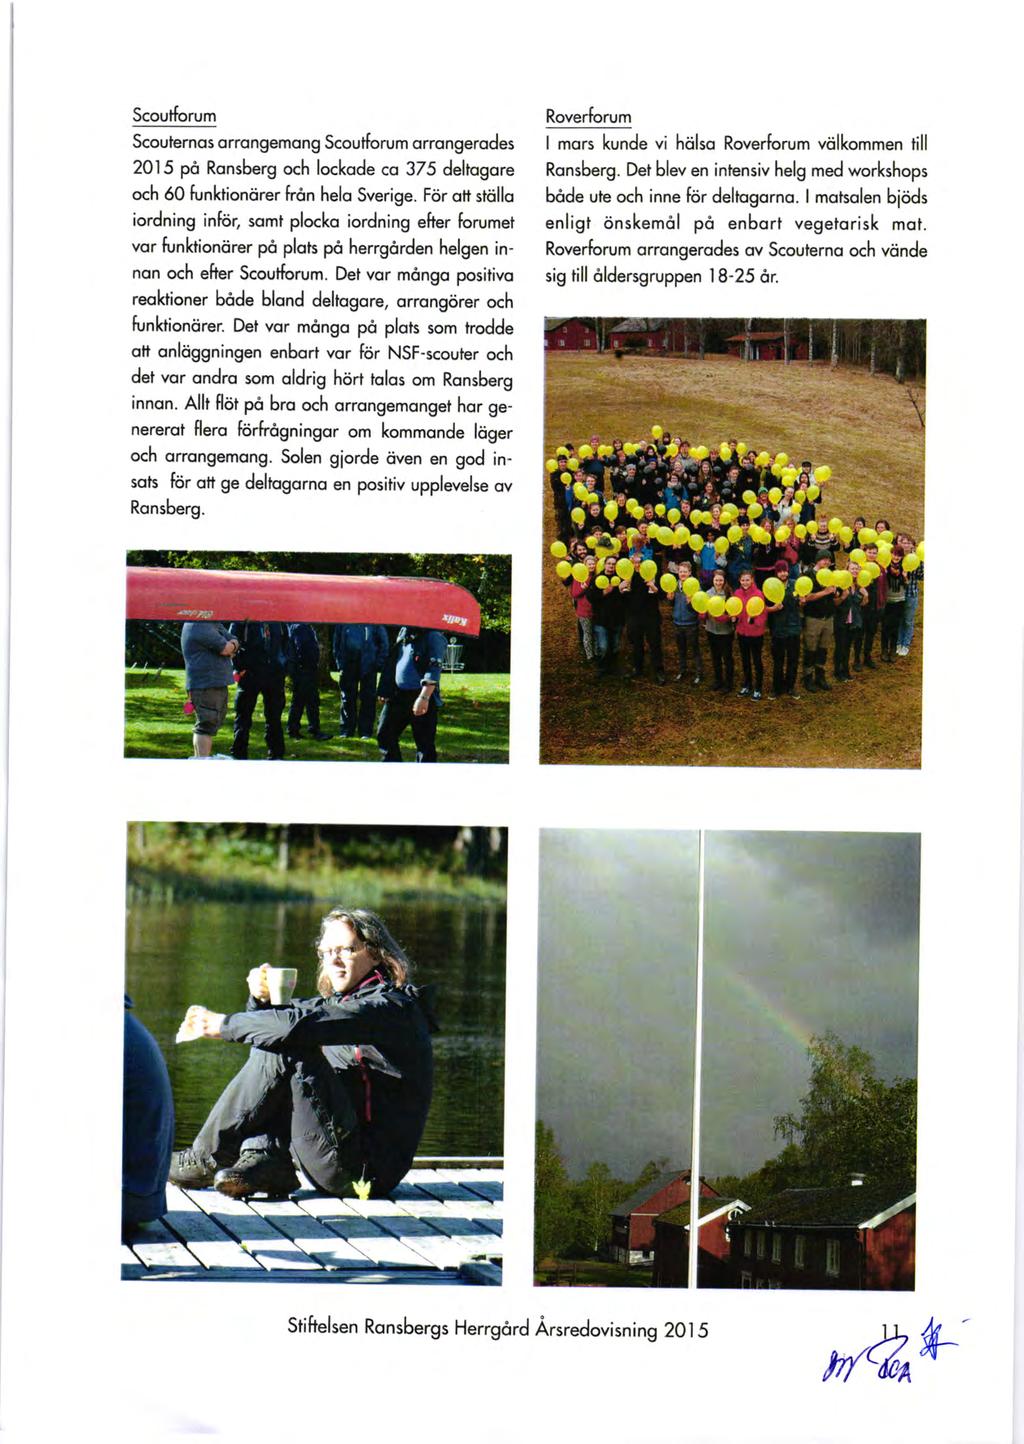 Scoutlorum Scouternos orrongemong Scoutforum orrongerodes 2015 pd Ronsberg och lockode co 375 deltogore och 60 funktioncirer frdn helo Sverige.